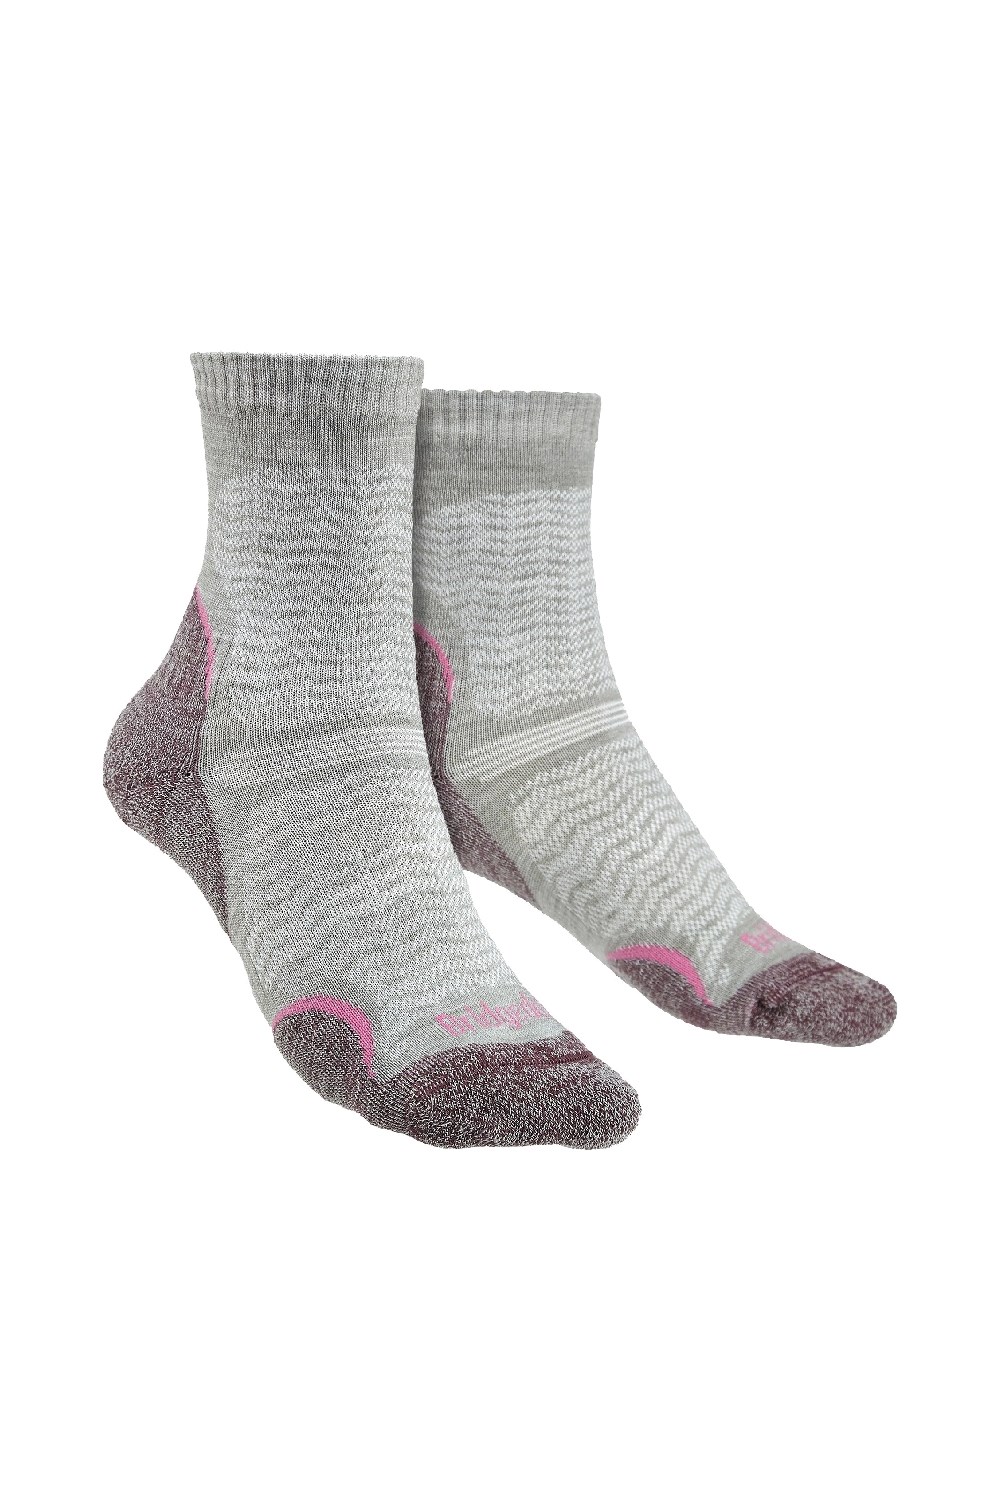 Womens Ultralight T2 Merino Hiking Socks -